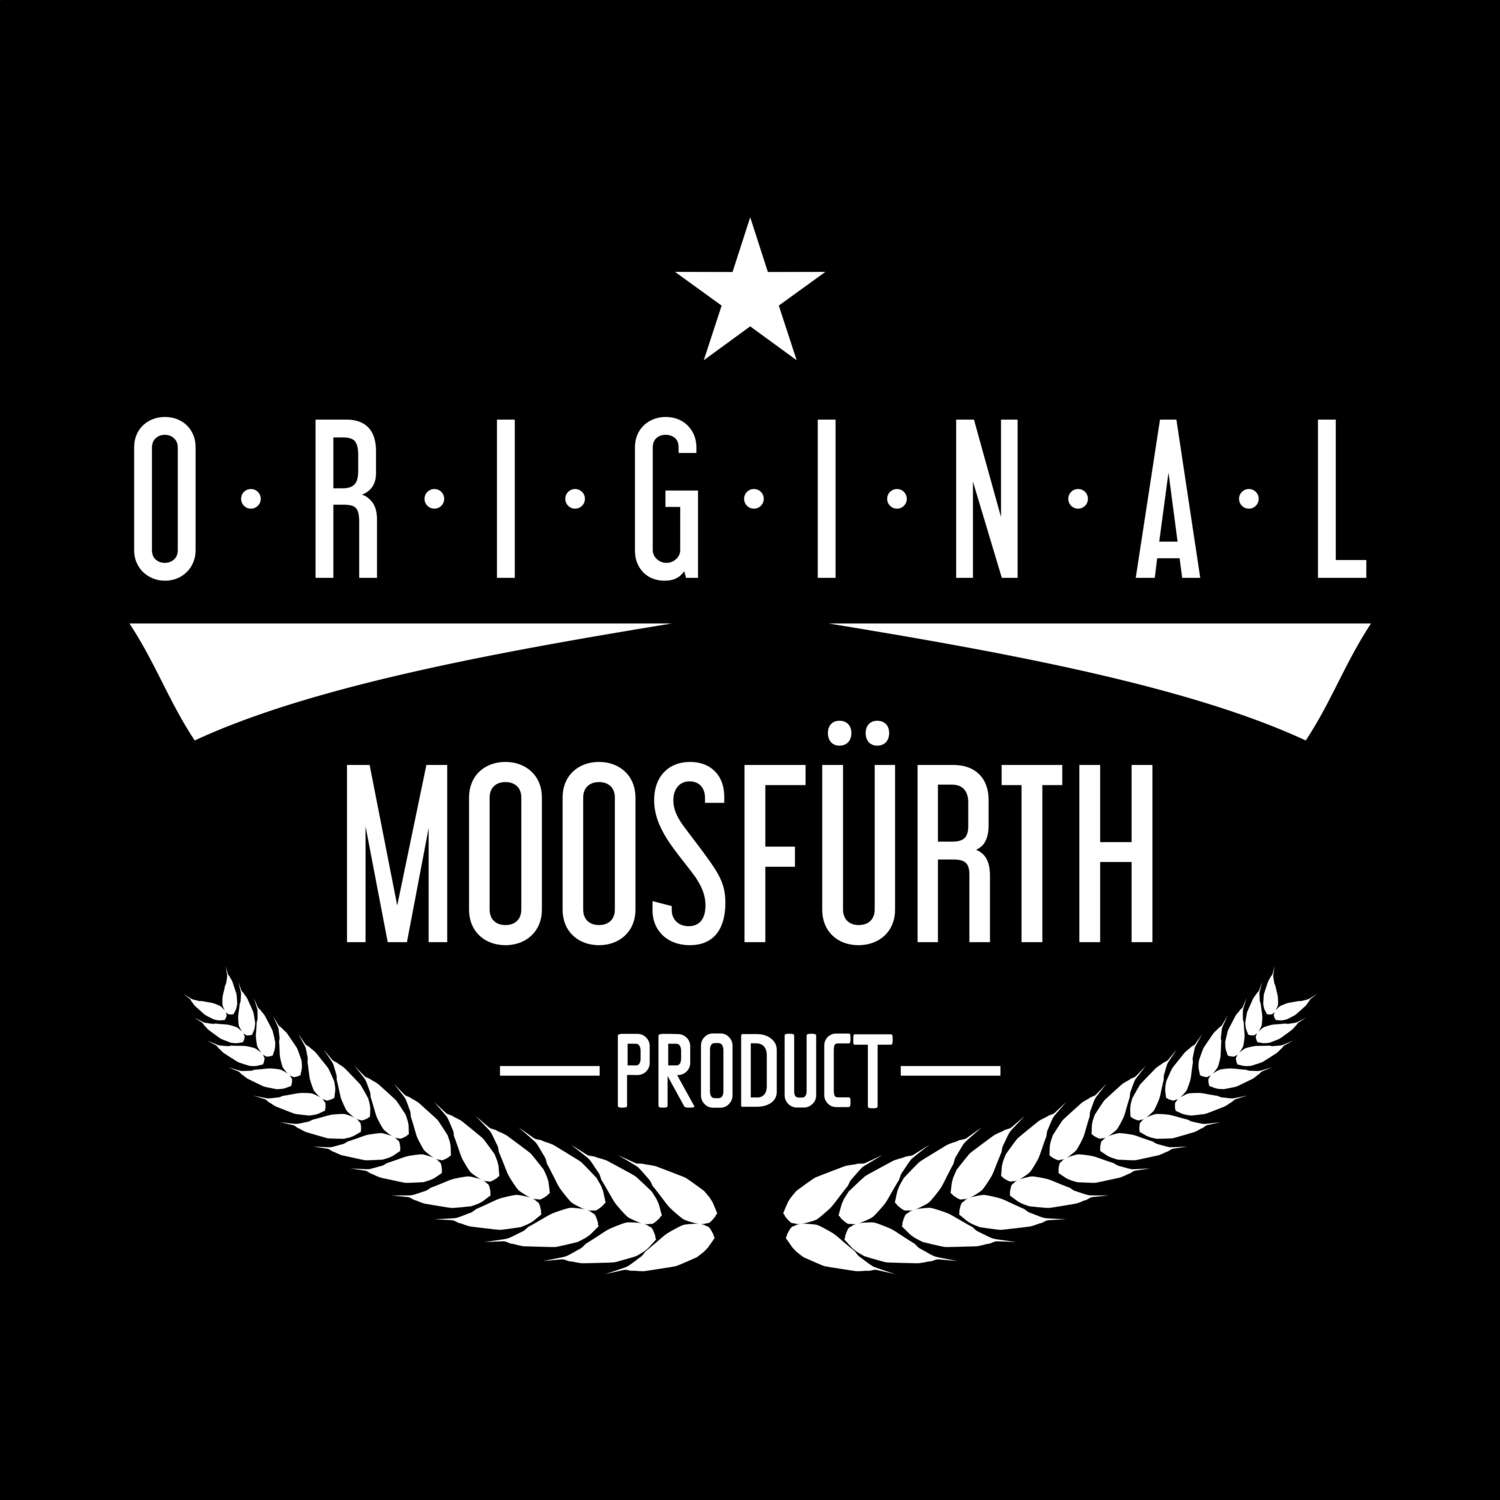 Moosfürth T-Shirt »Original Product«